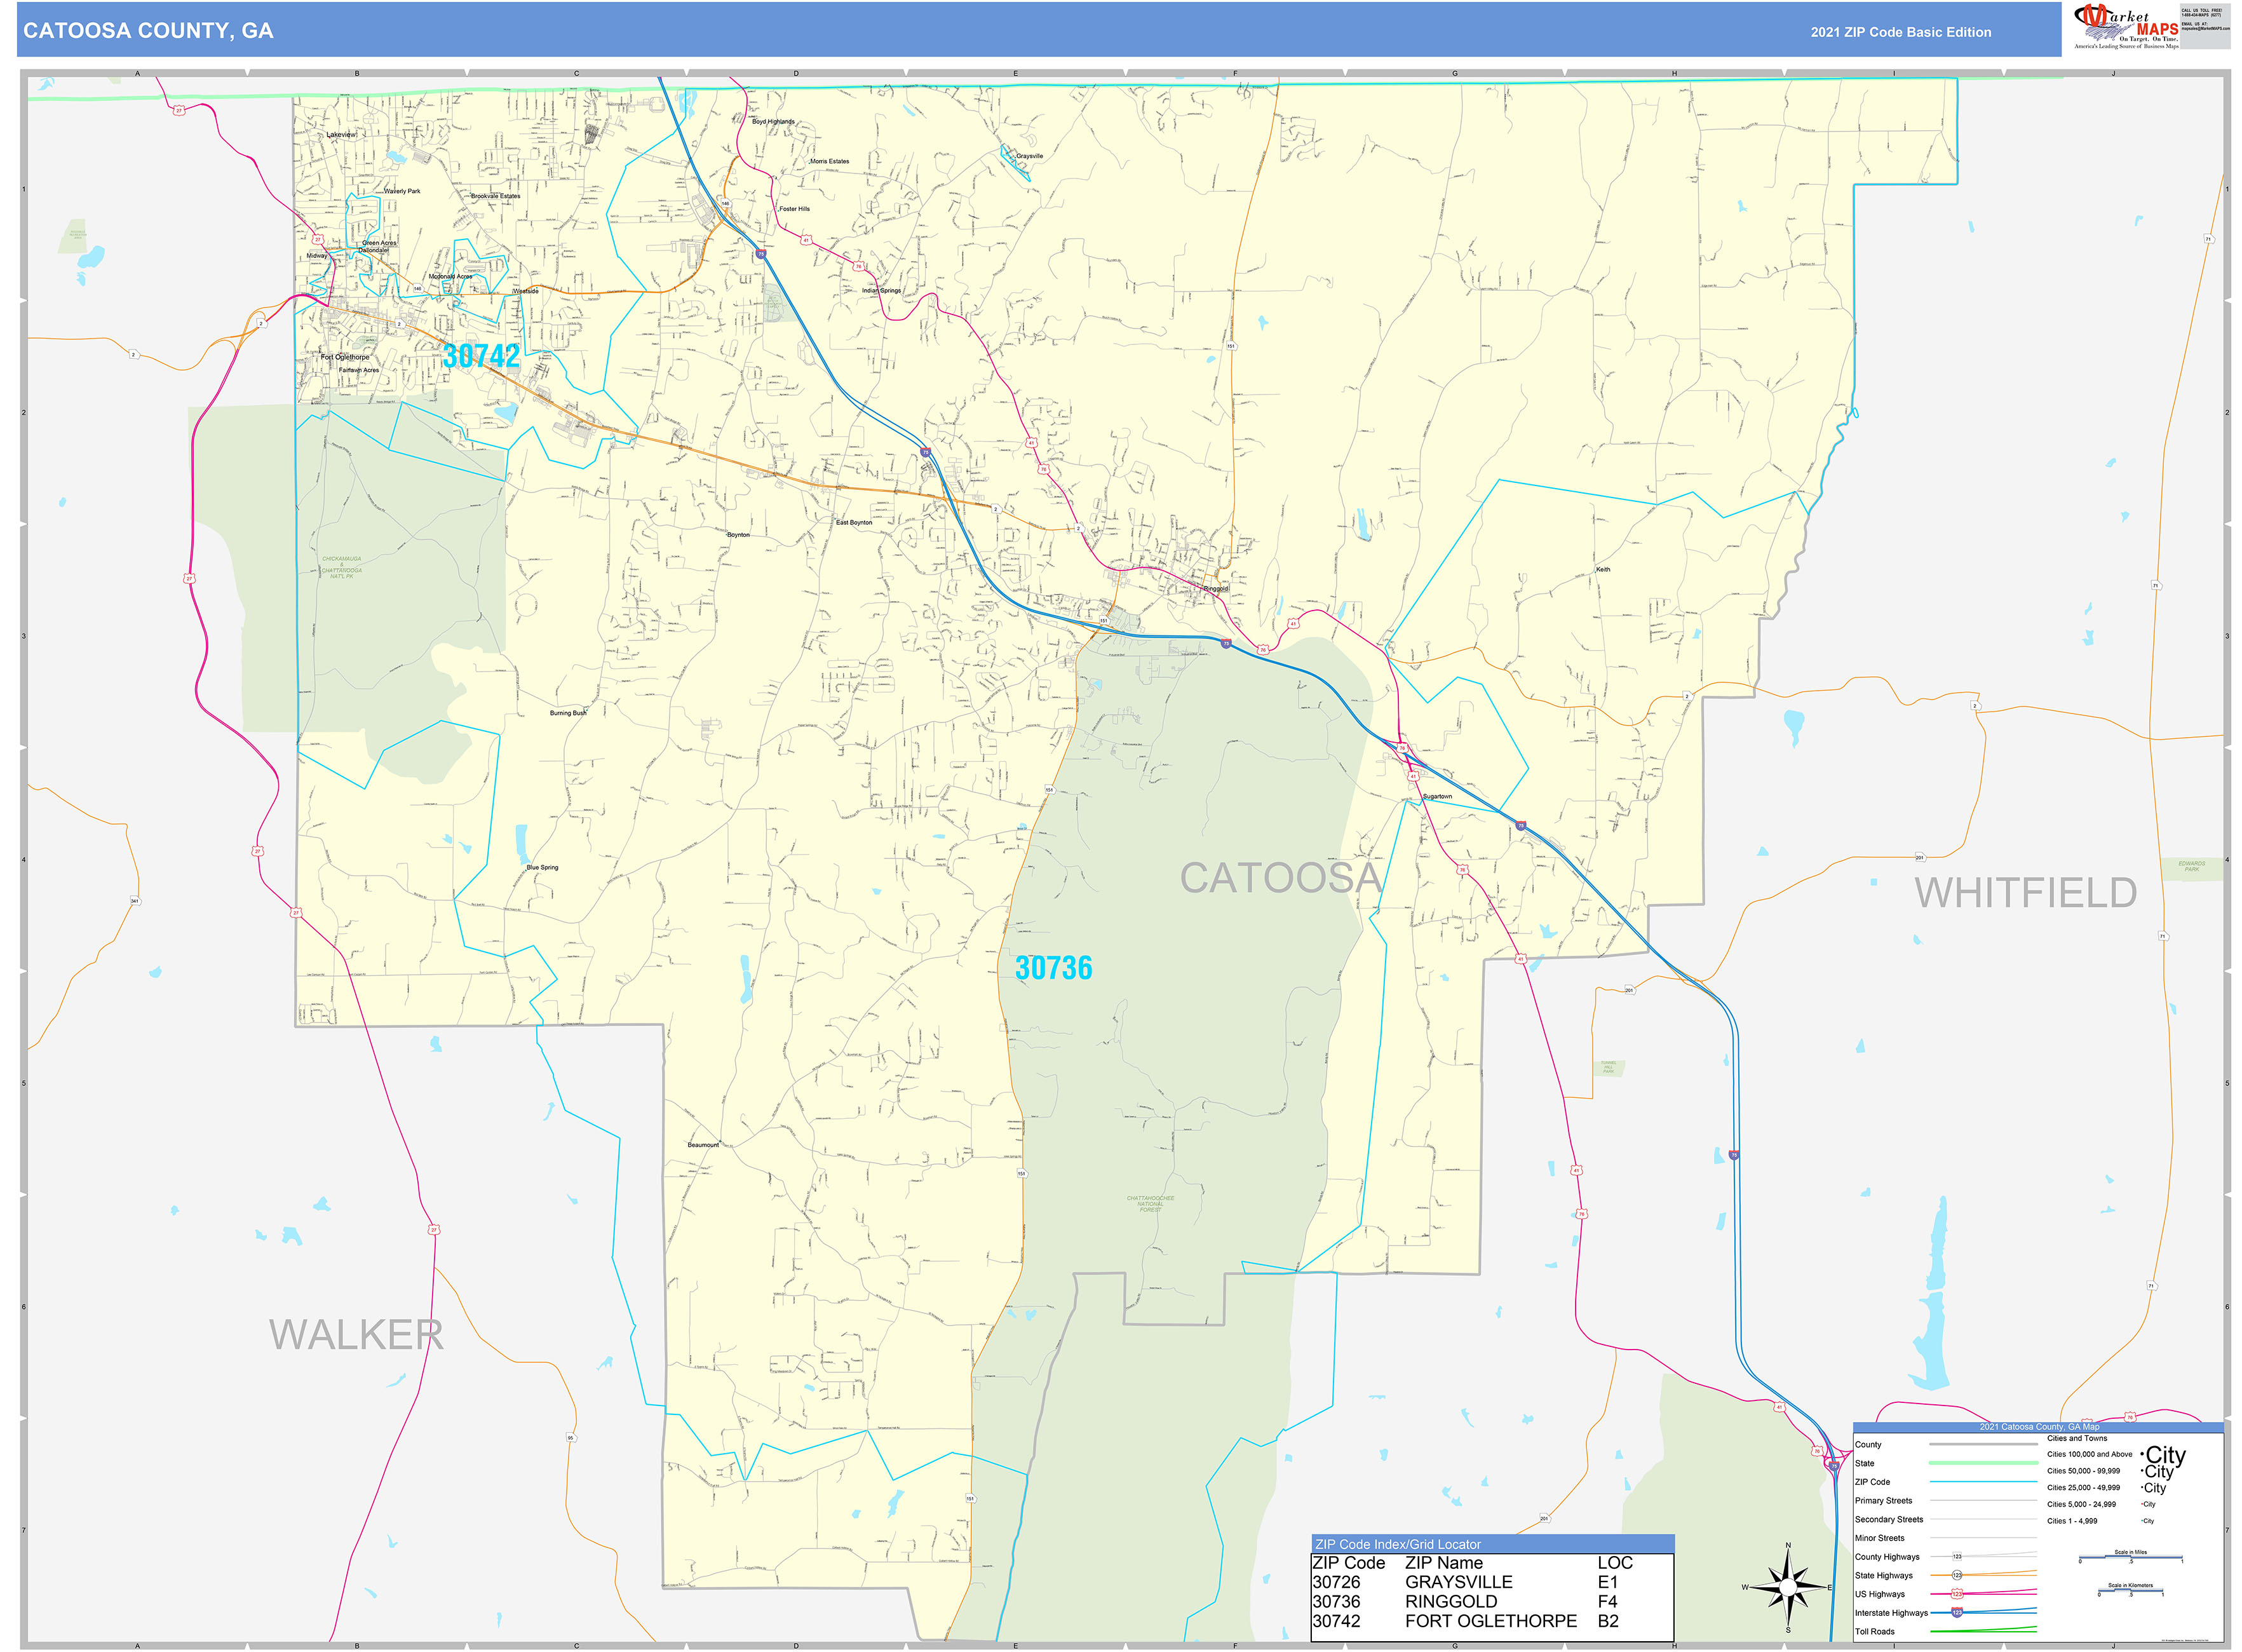 Catoosa County, GA Zip Code Wall Map Basic Style by MarketMAPS MapSales